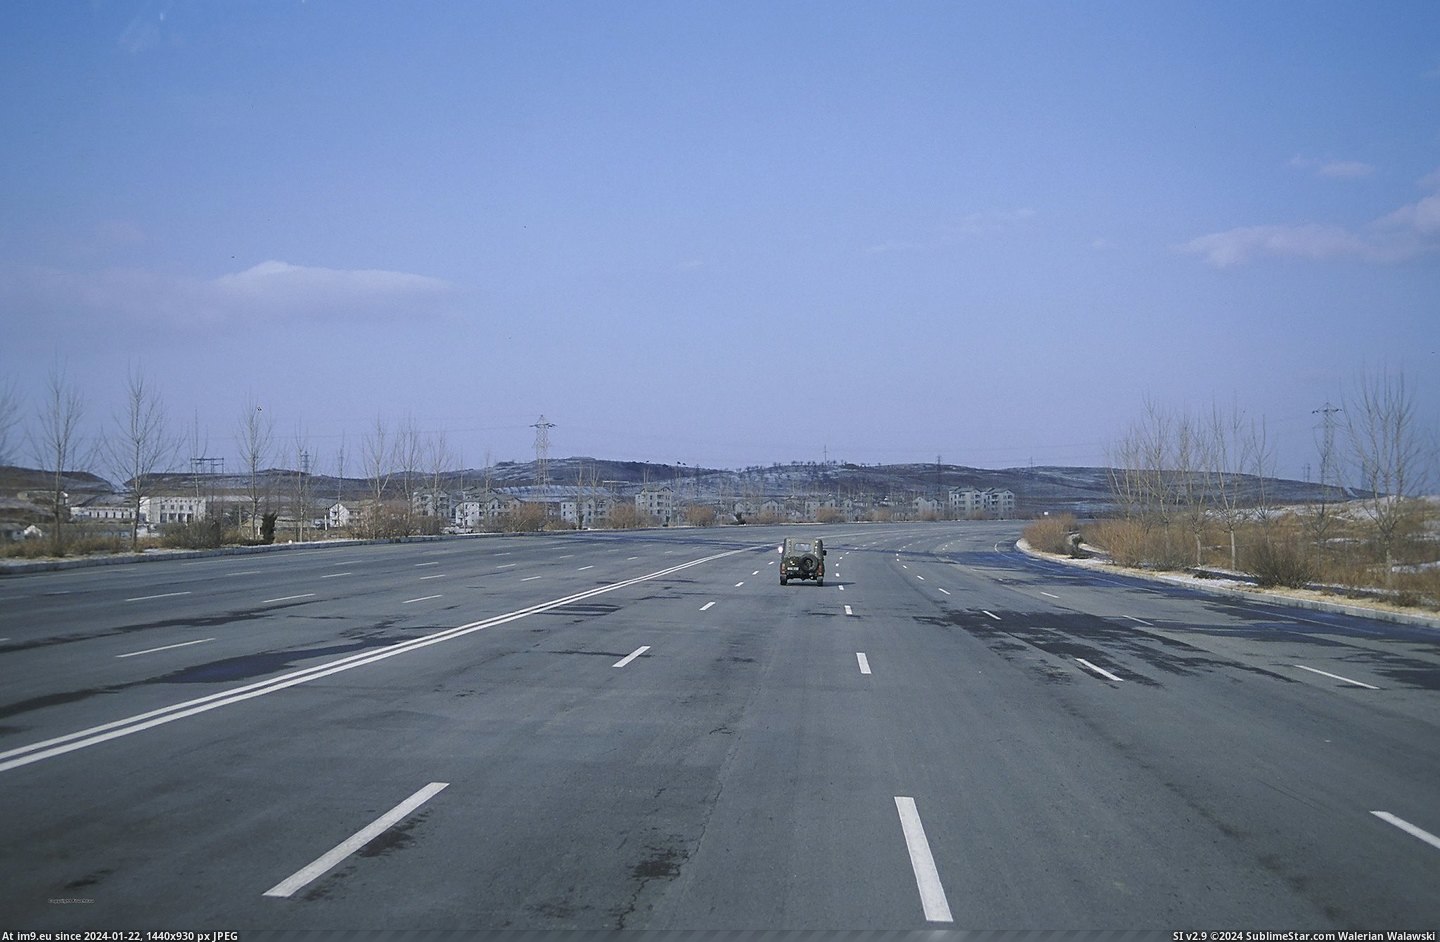 #North #Empty #Highways #Korea [Pics] The empty highways of North Korea. Pic. (Изображение из альбом My r/PICS favs))